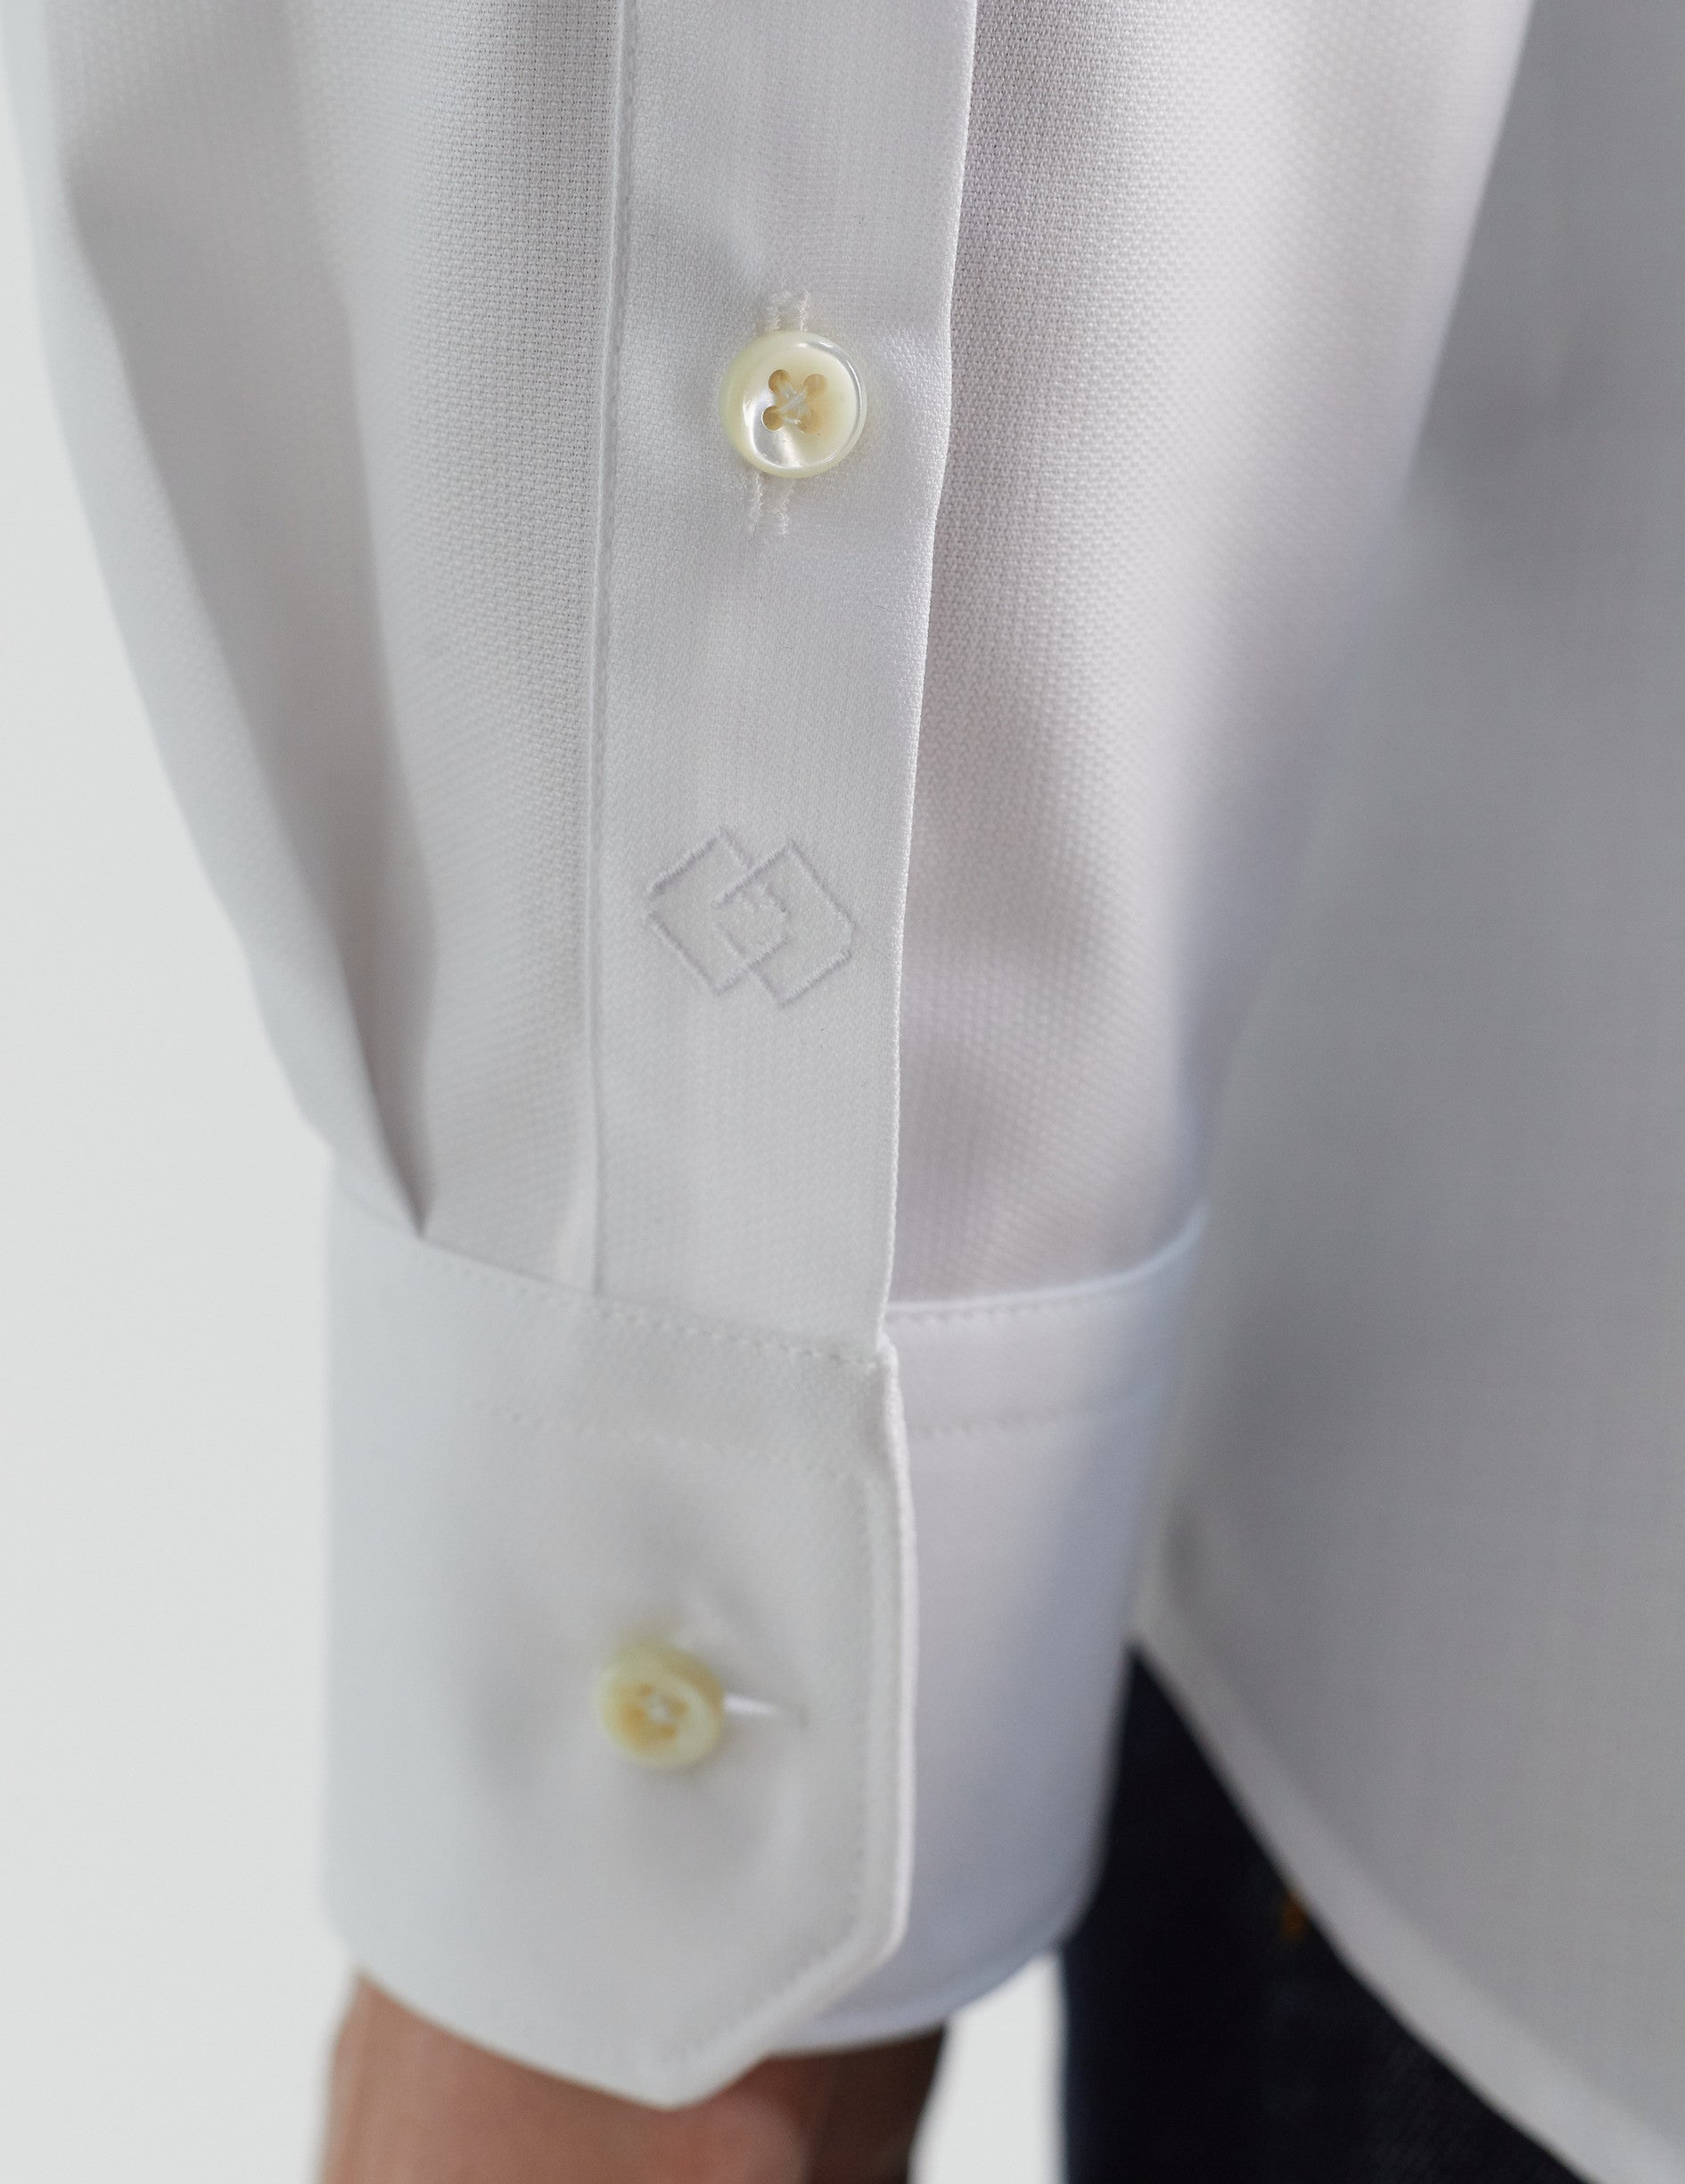 White Classic Shirt - Shaped - Figaret Collar